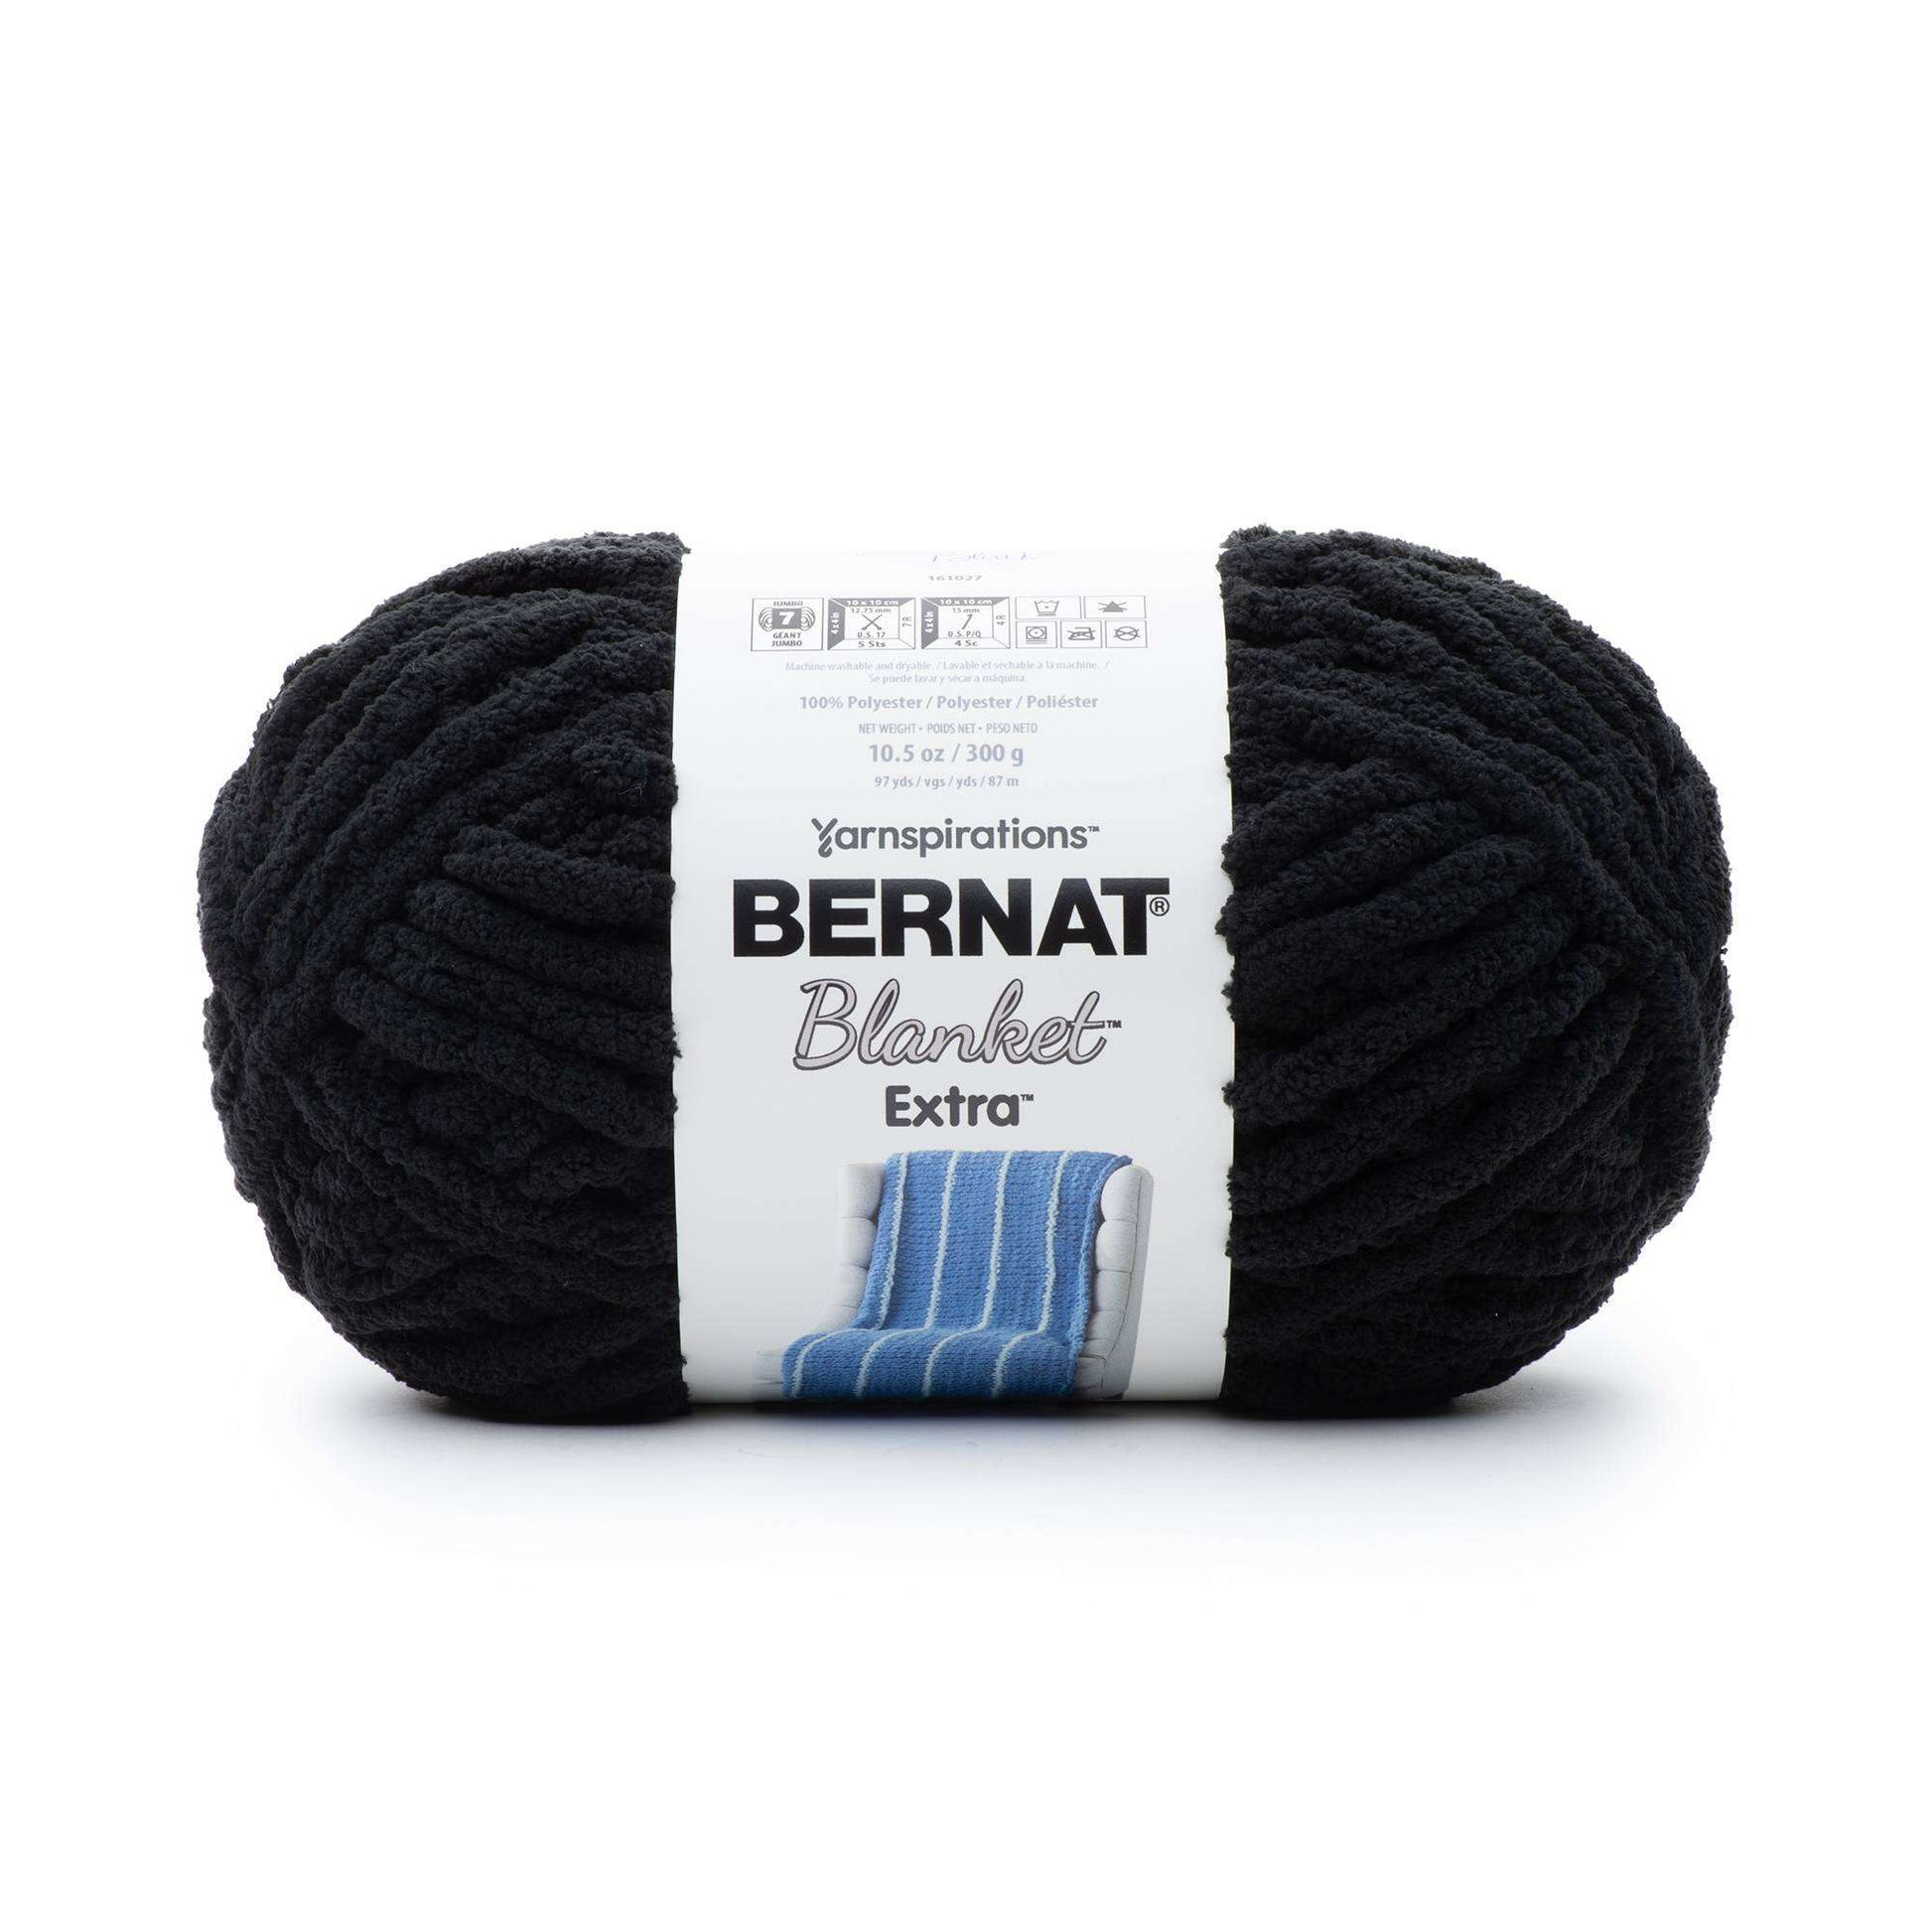 Bernat Blanket Extra Yarn (300g/10.5oz) - Clearance Shades* Black